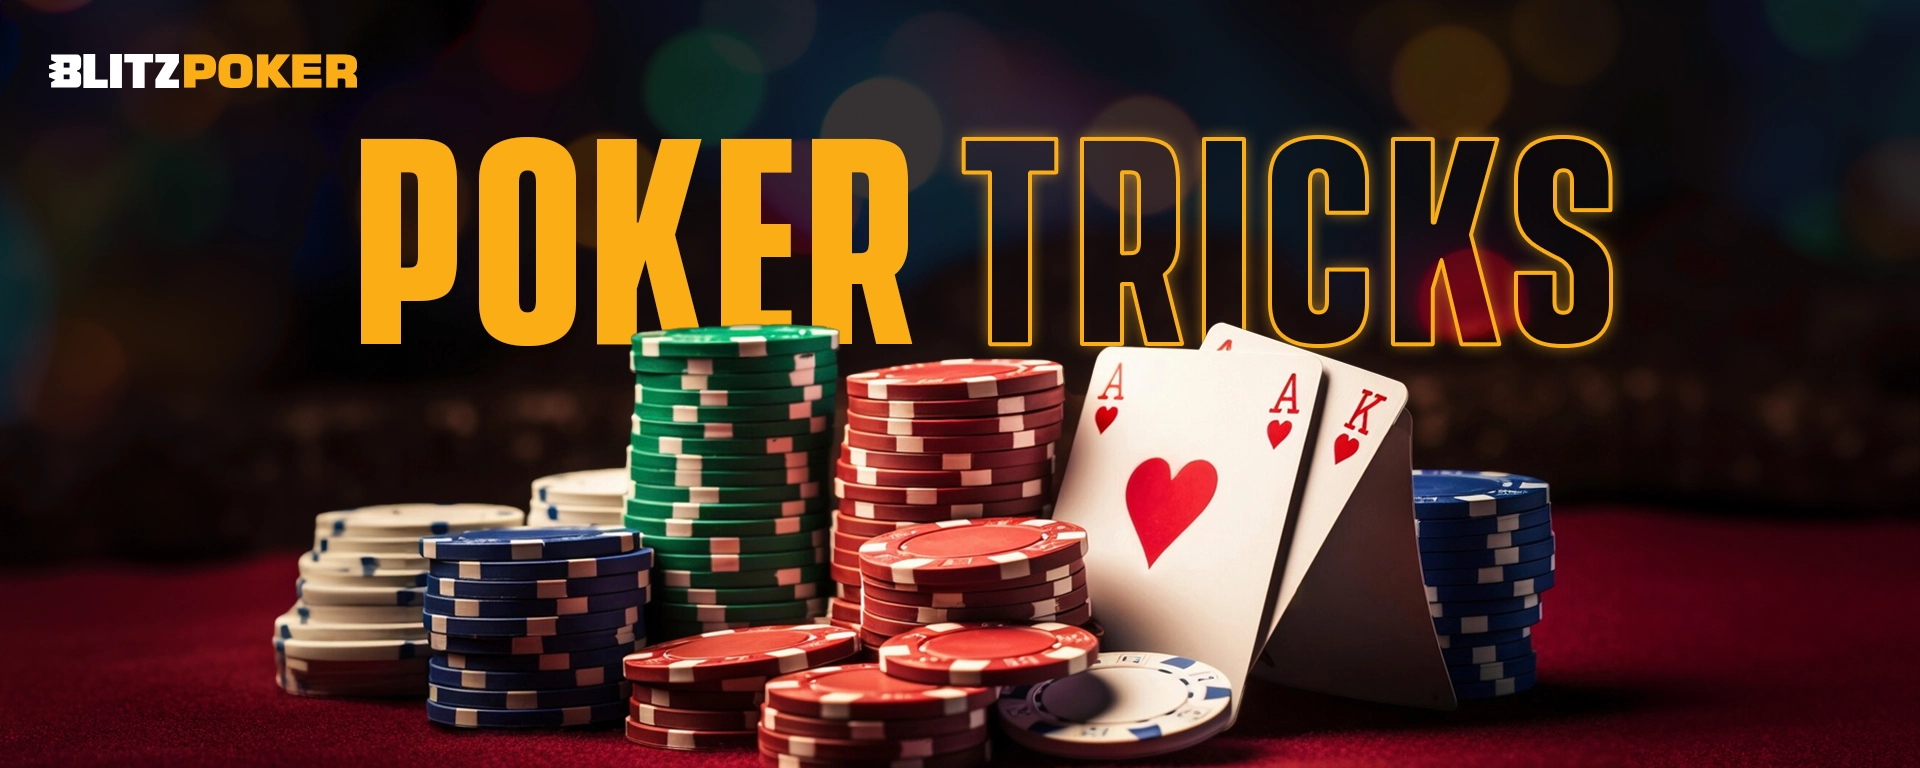 Poker Tricks